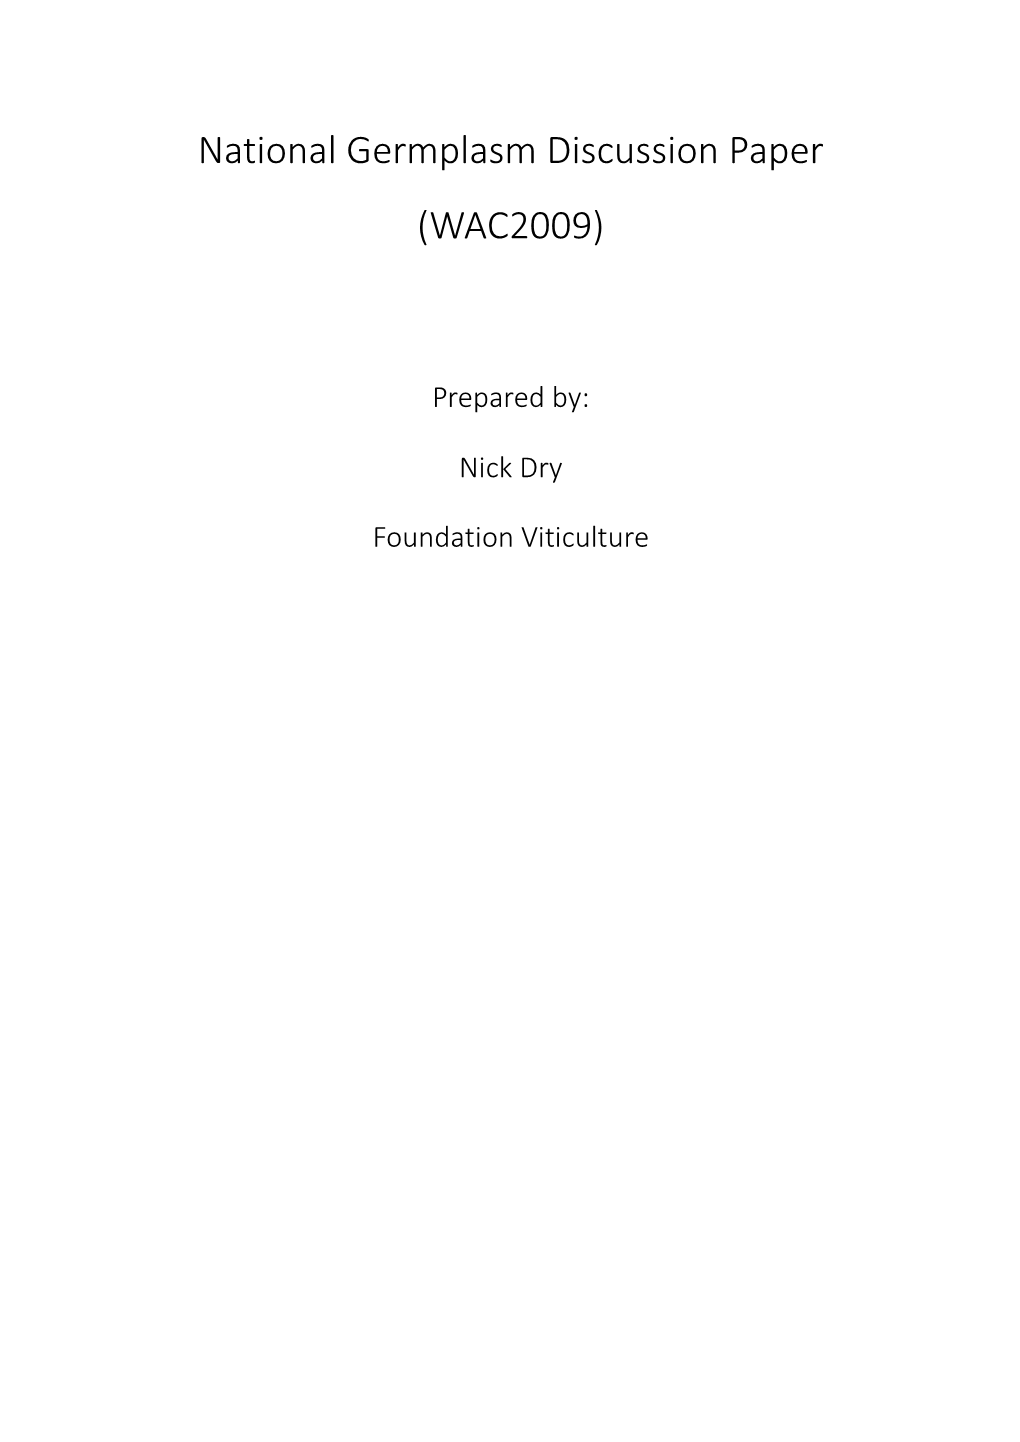 National Germplasm Discussion Paper (WAC2009)